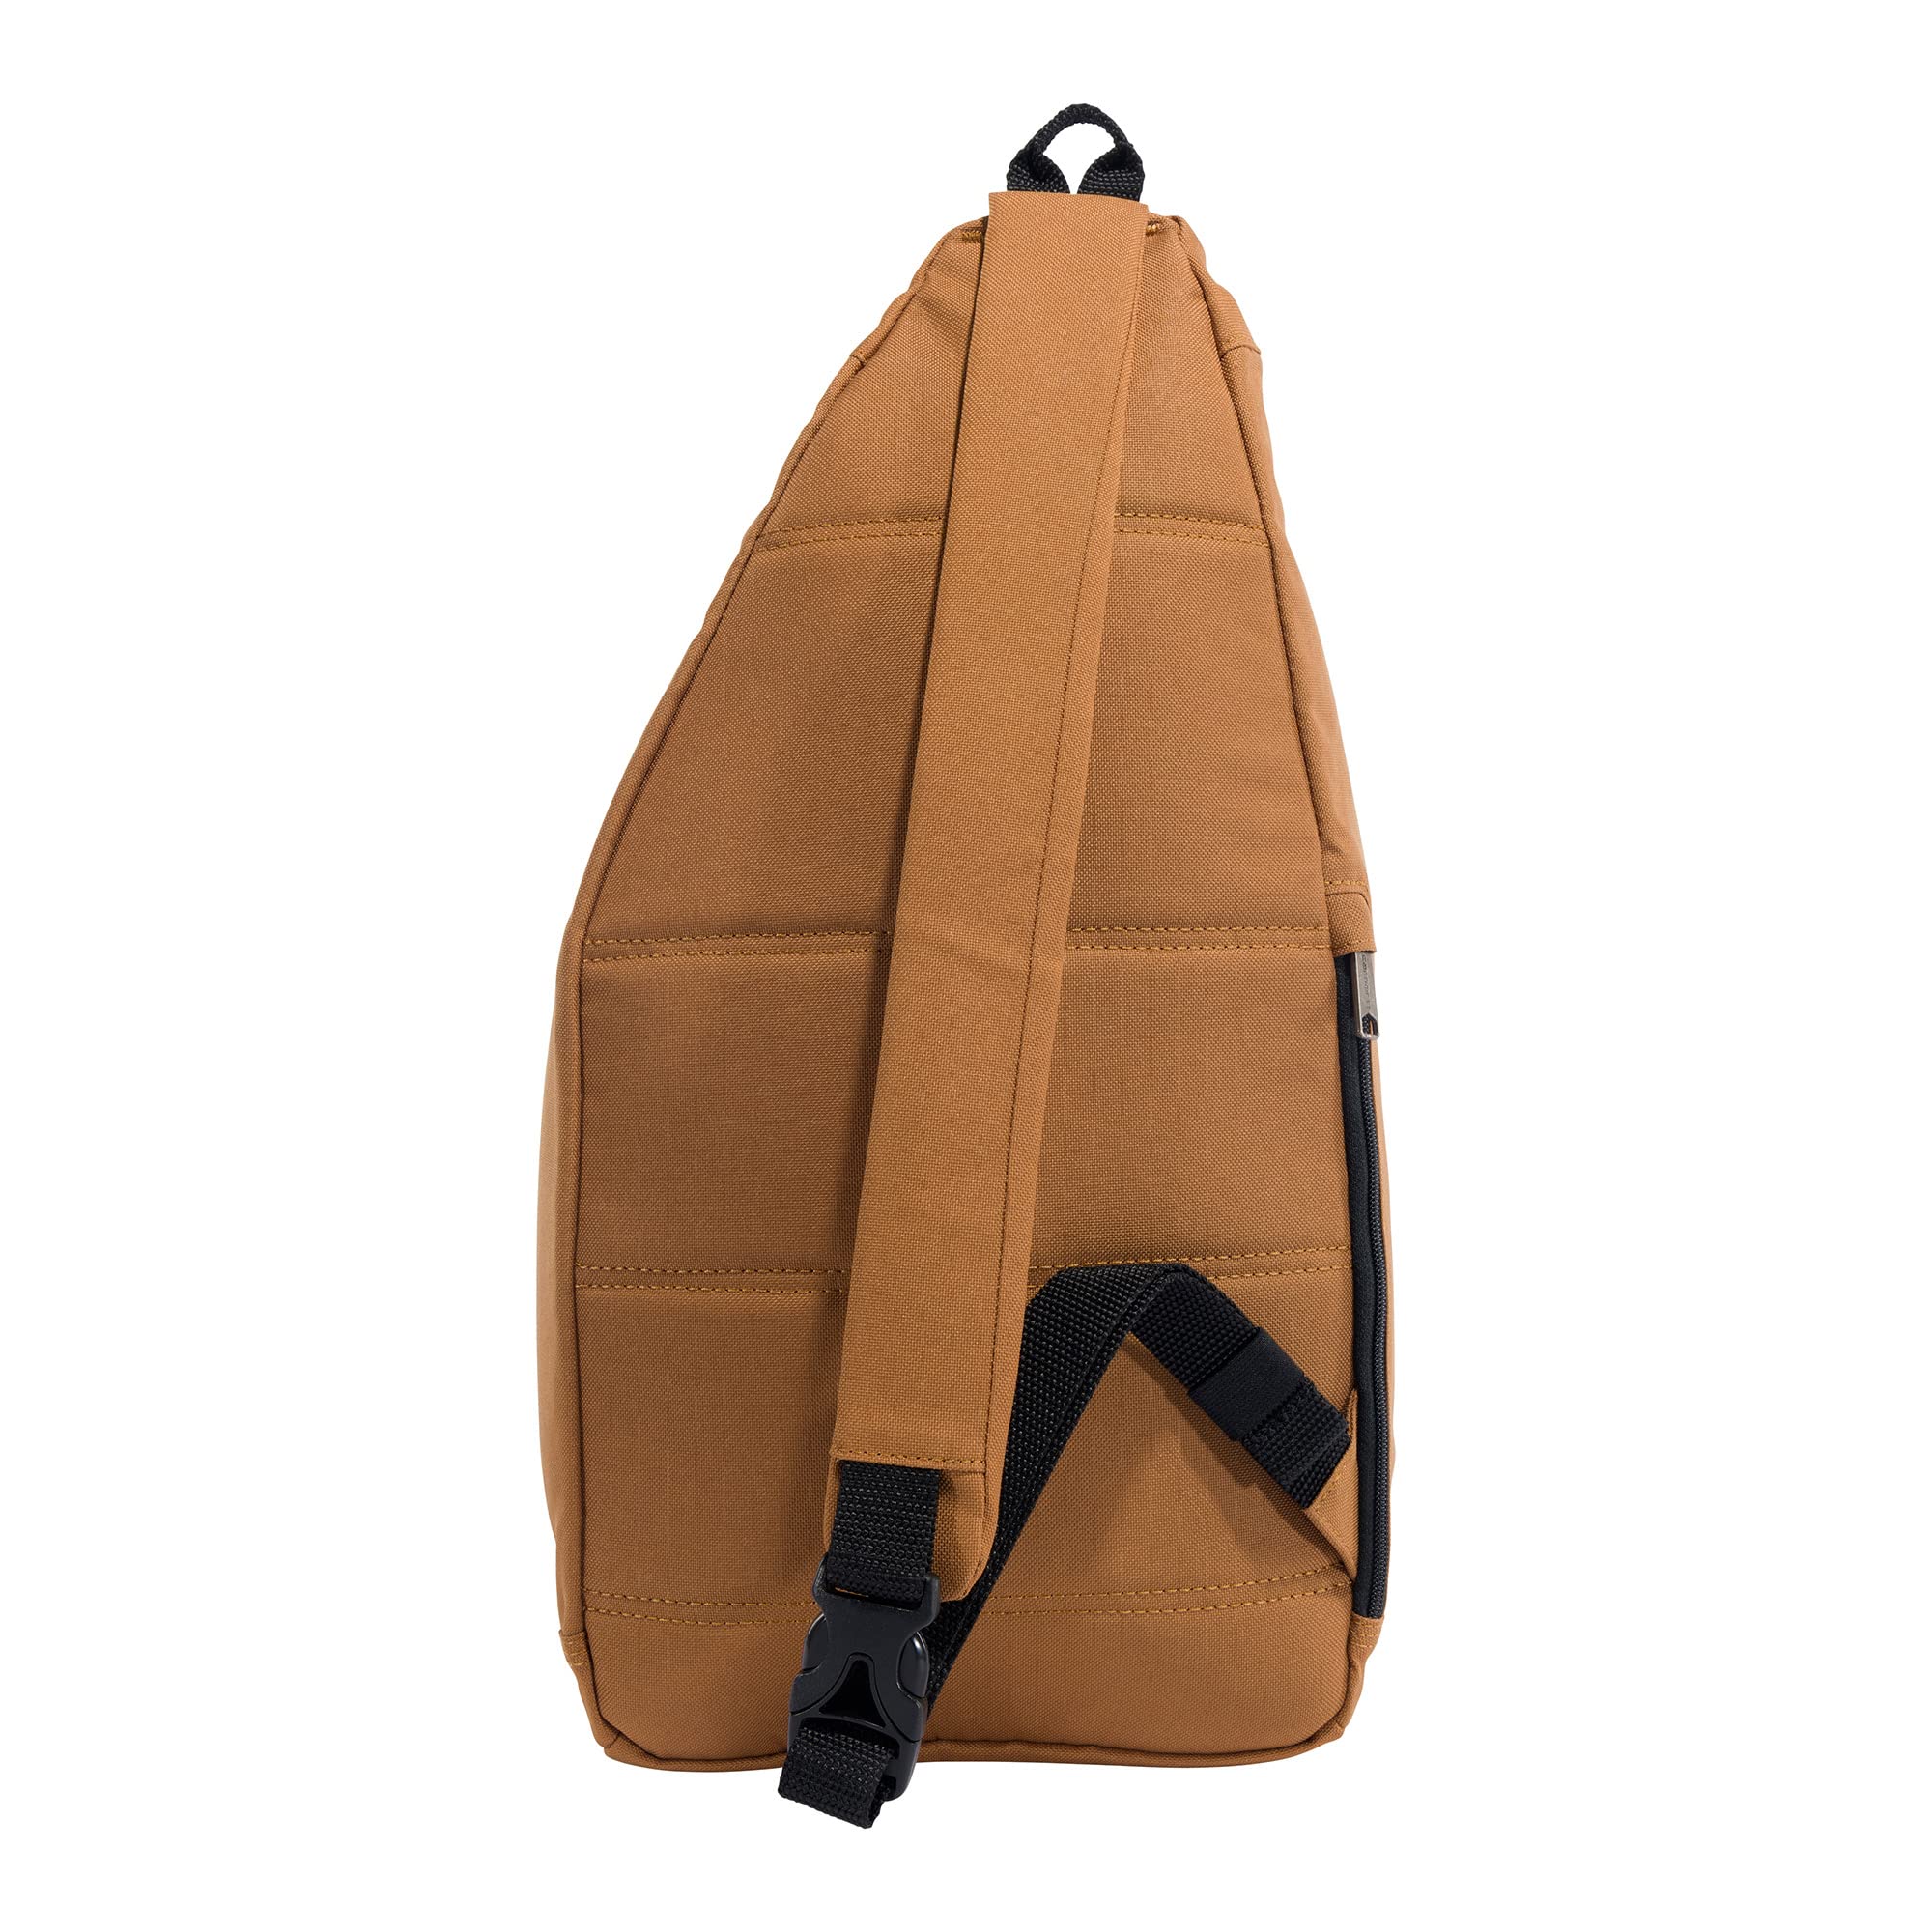 Carhartt Mono Sling Backpack, Unisex Crossbody Bag for Travel and Hiking, Carhartt Brown